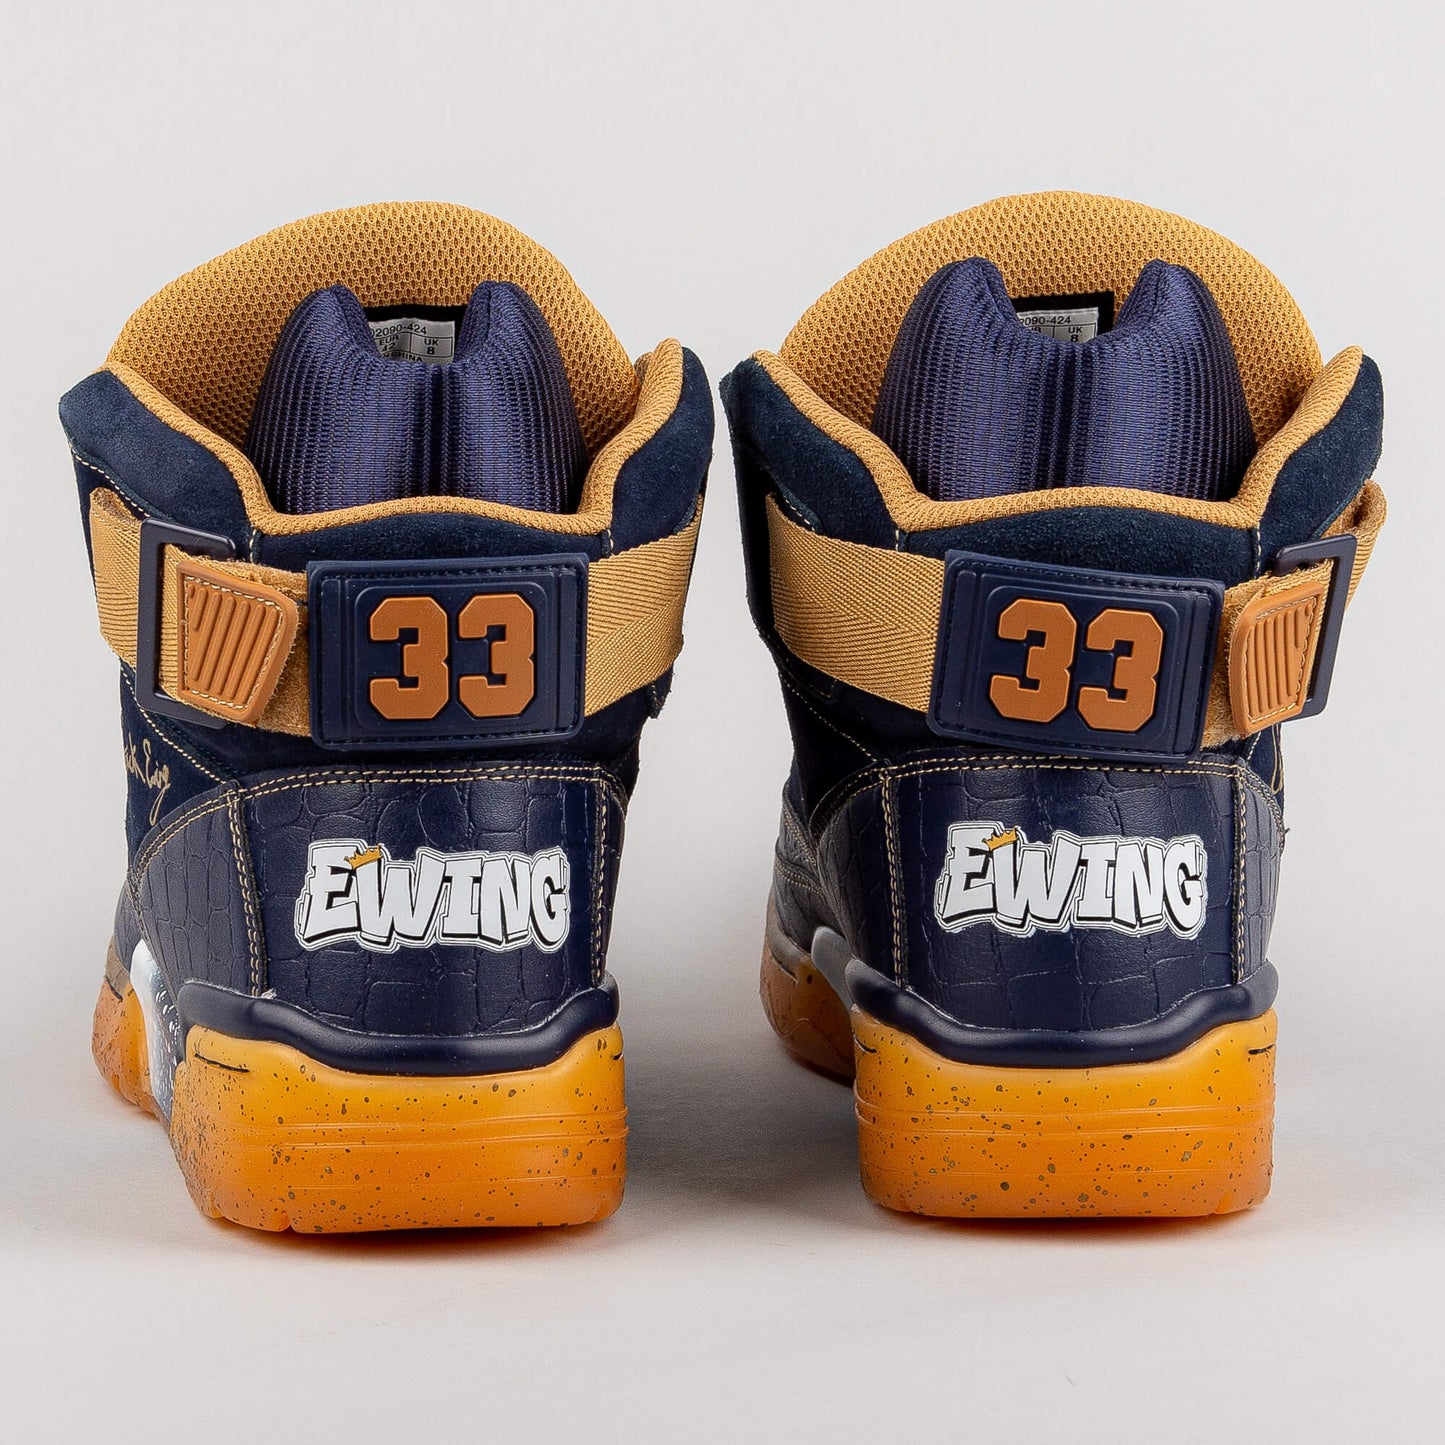 Ewing Athletics 33 HI x Where Brooklyn At navy/gold